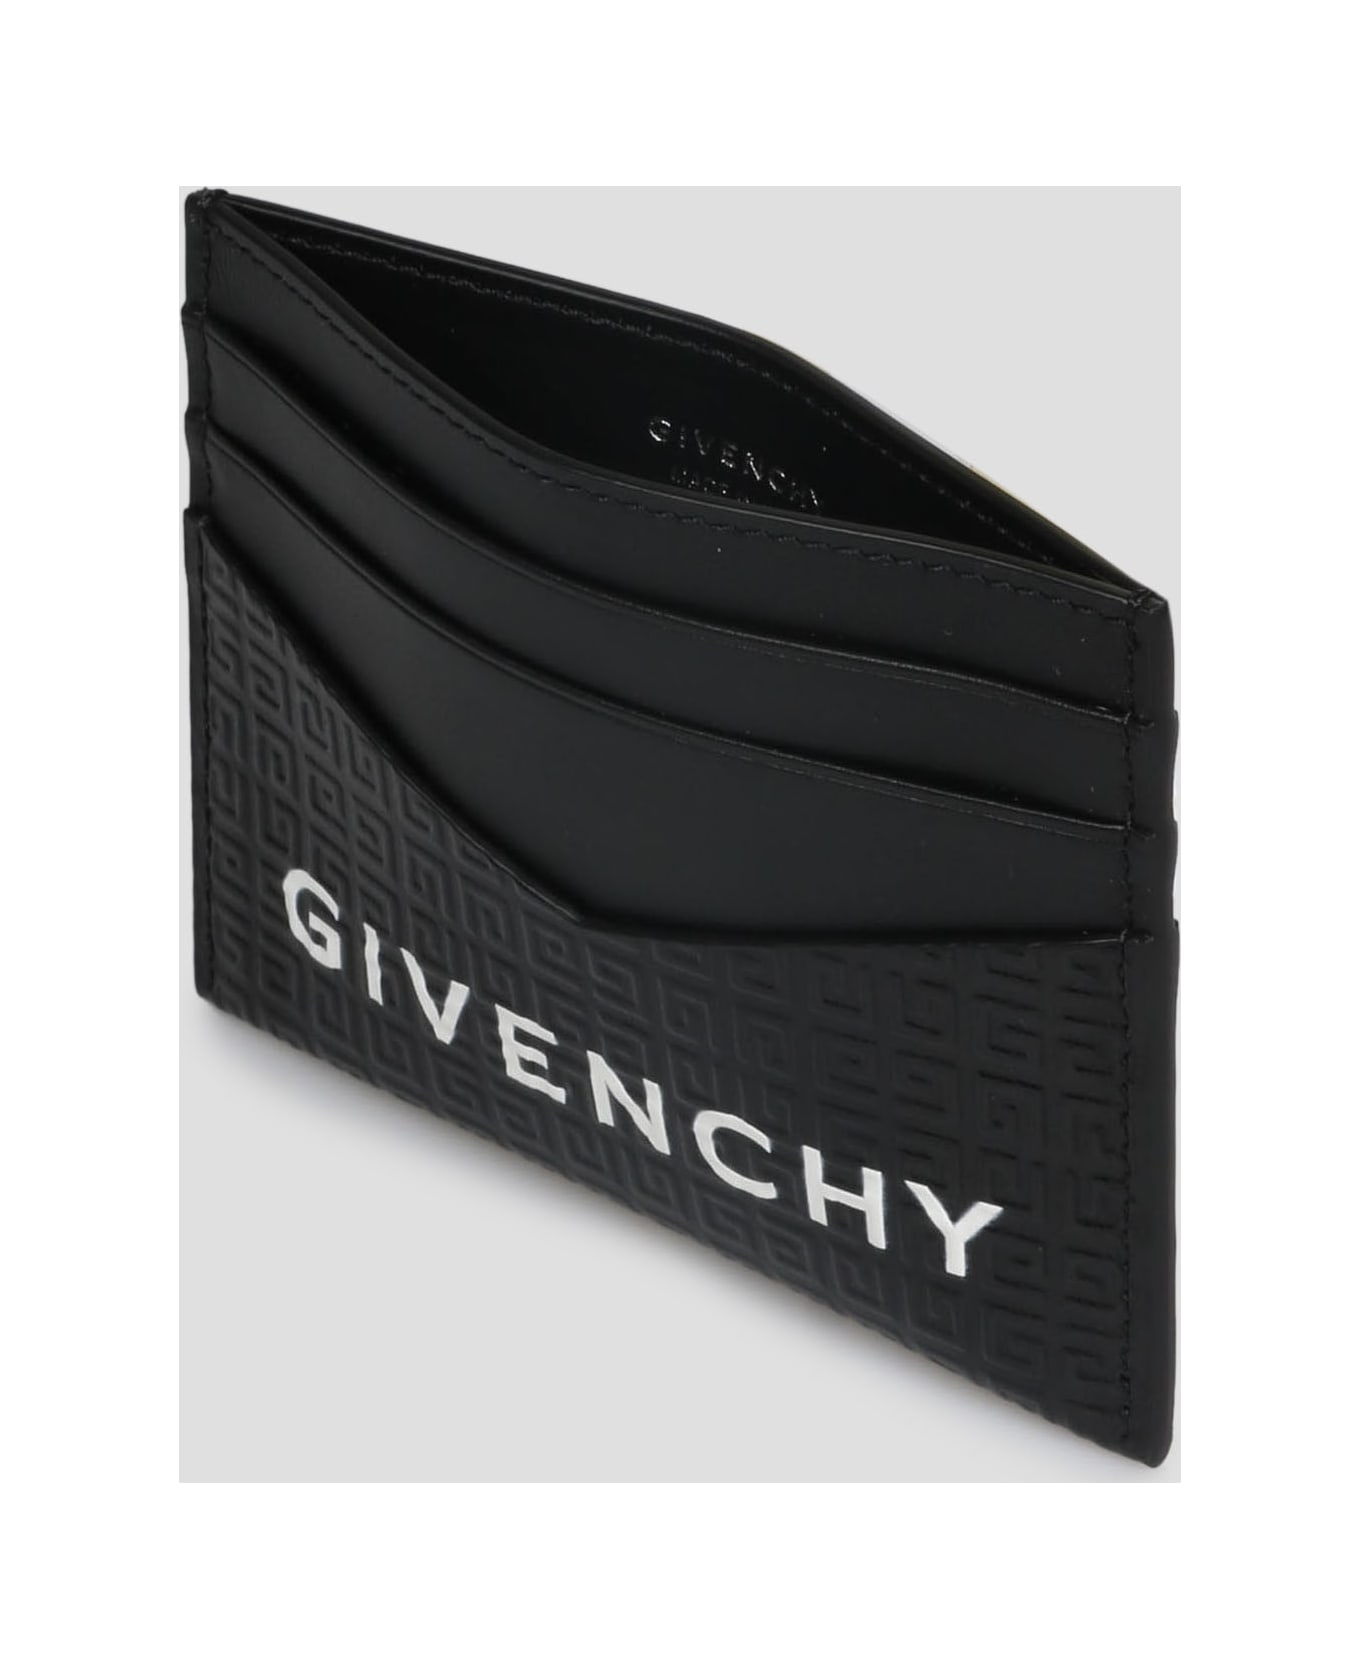 Givenchy 4g Leather Card Holder - Black